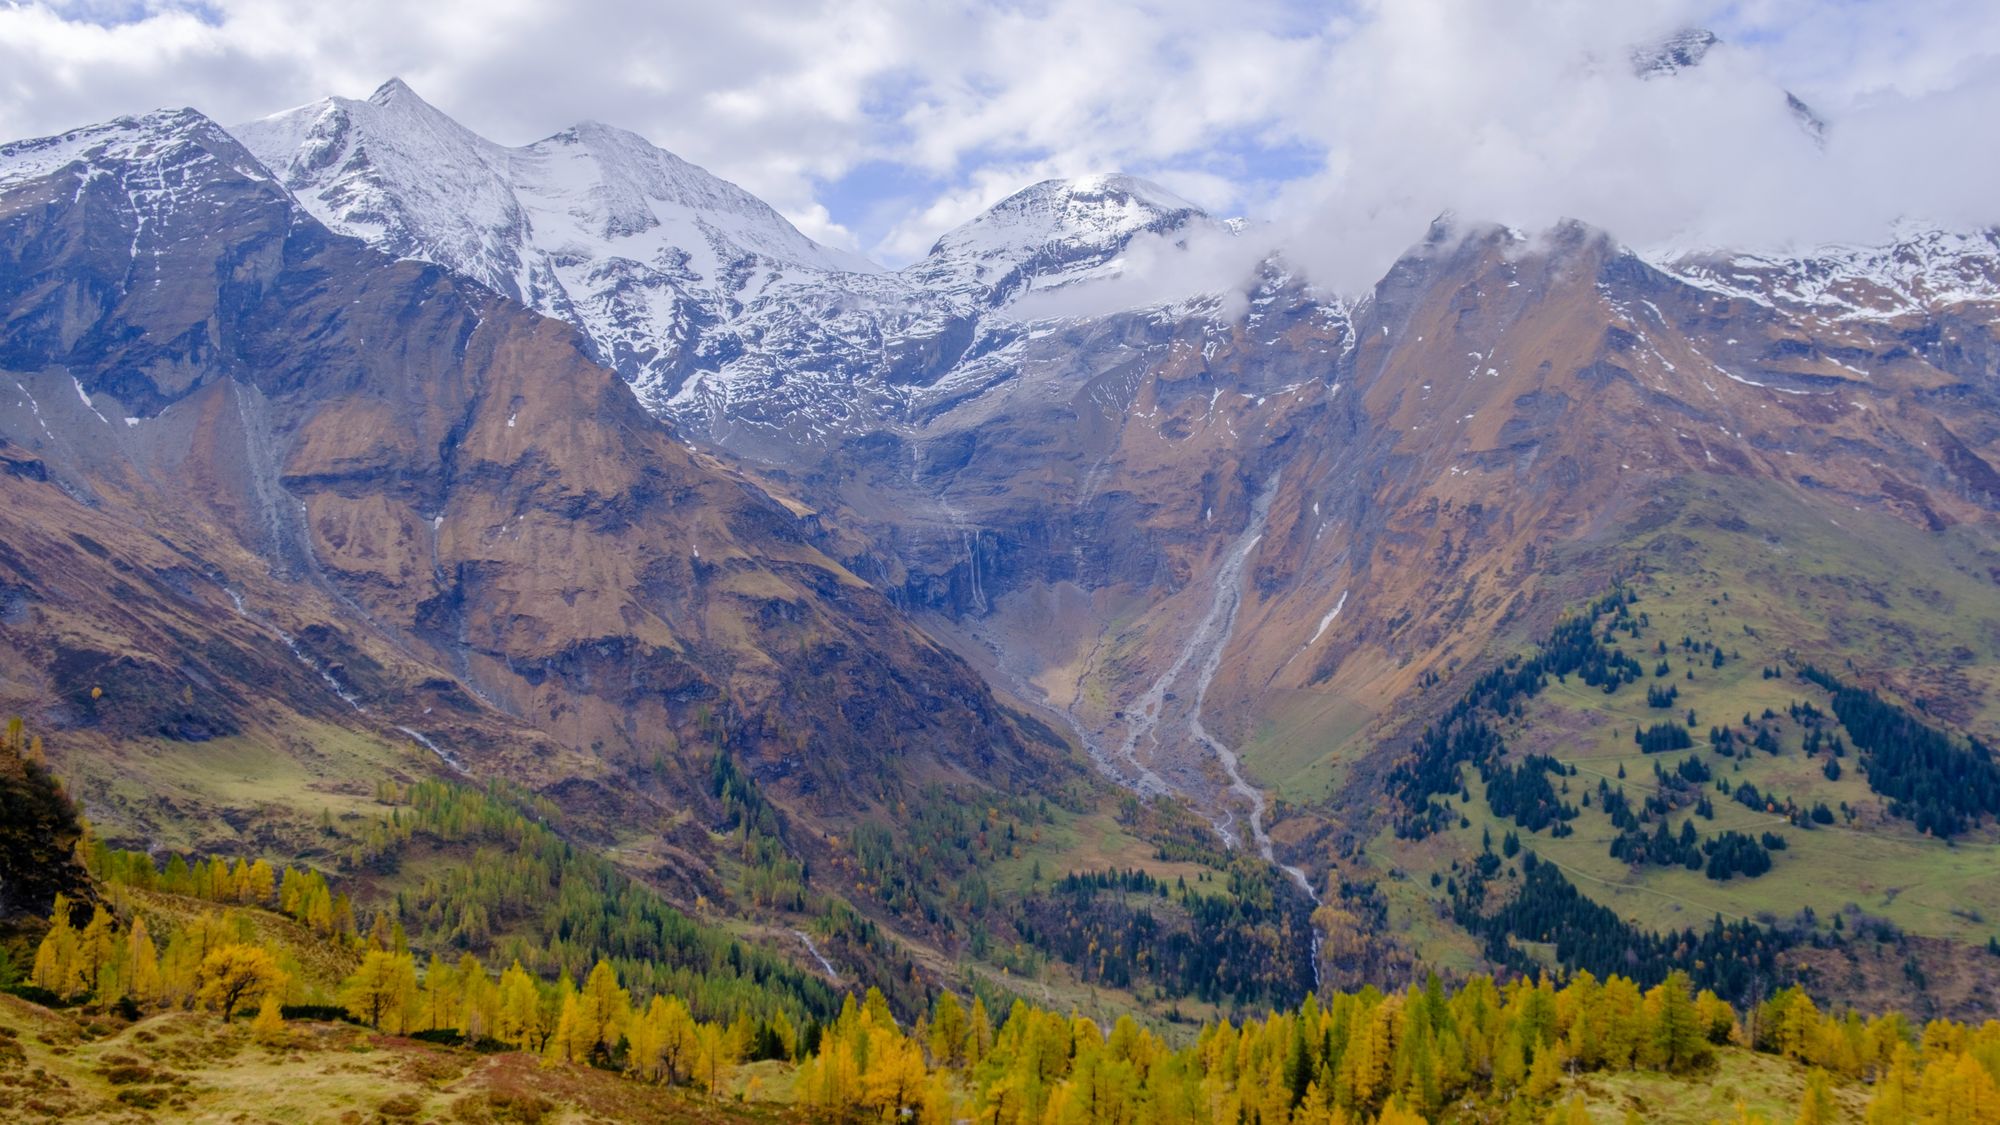 Austria's mountains in autumn colors - October road trip 2022